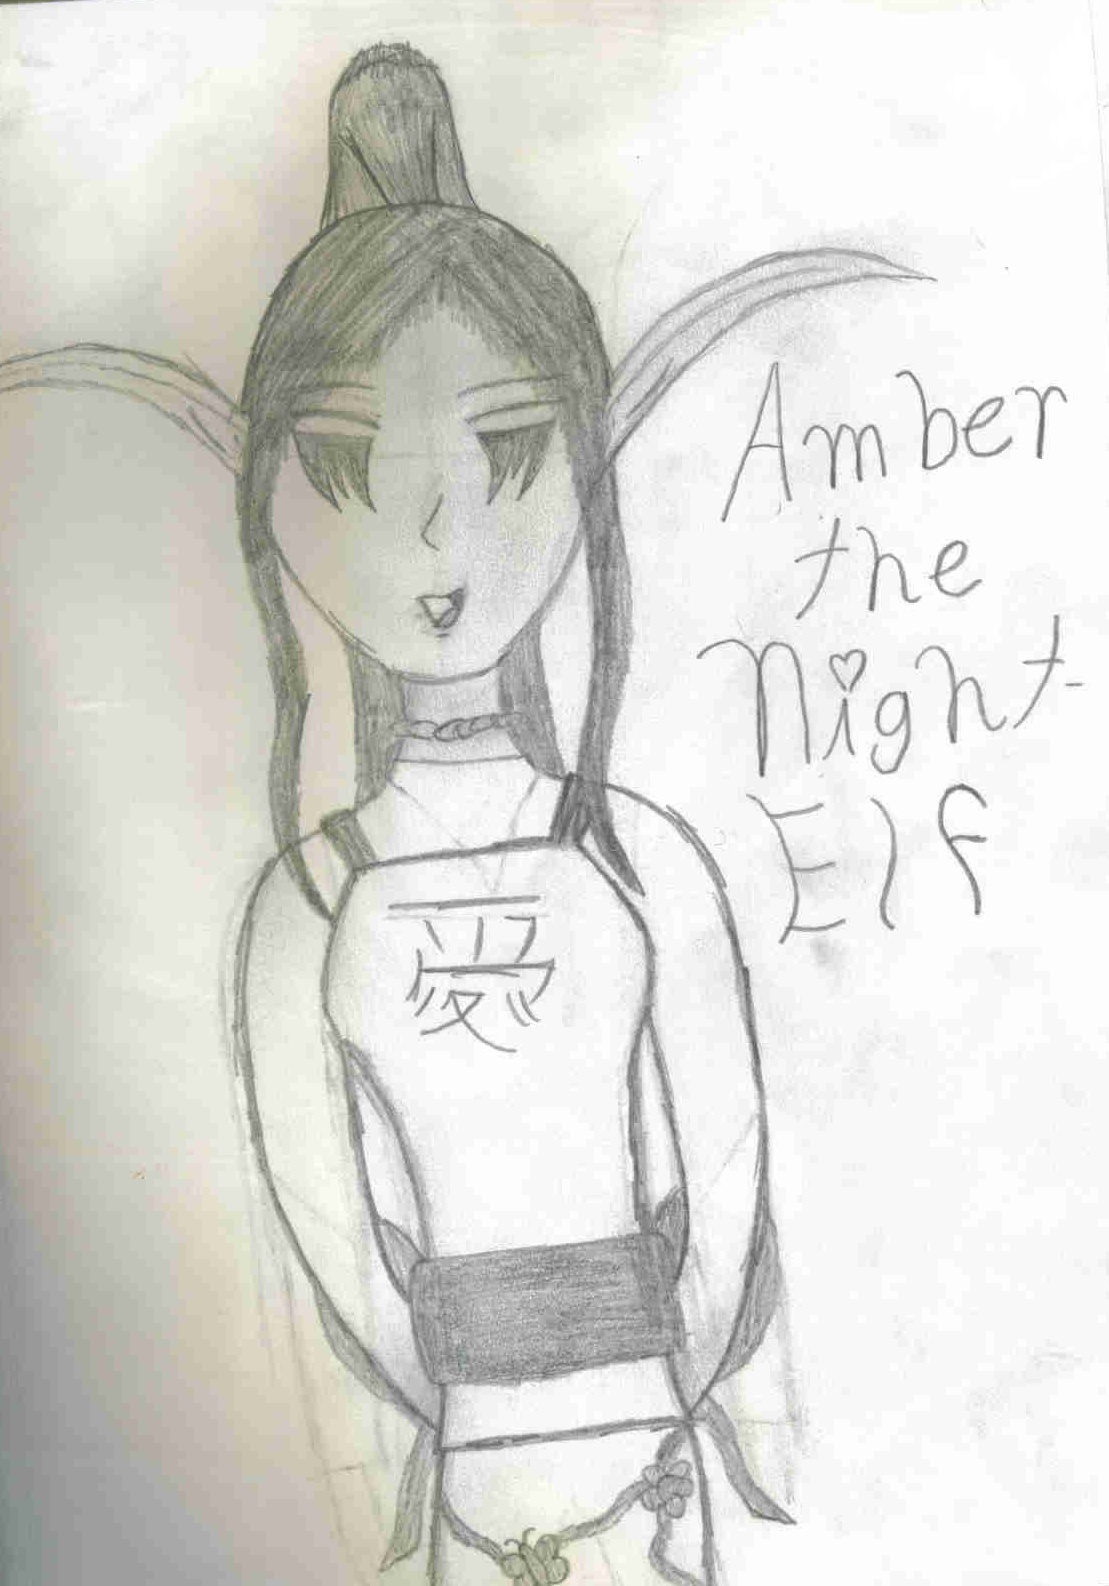 Amber The Night-Elf by crazicat06